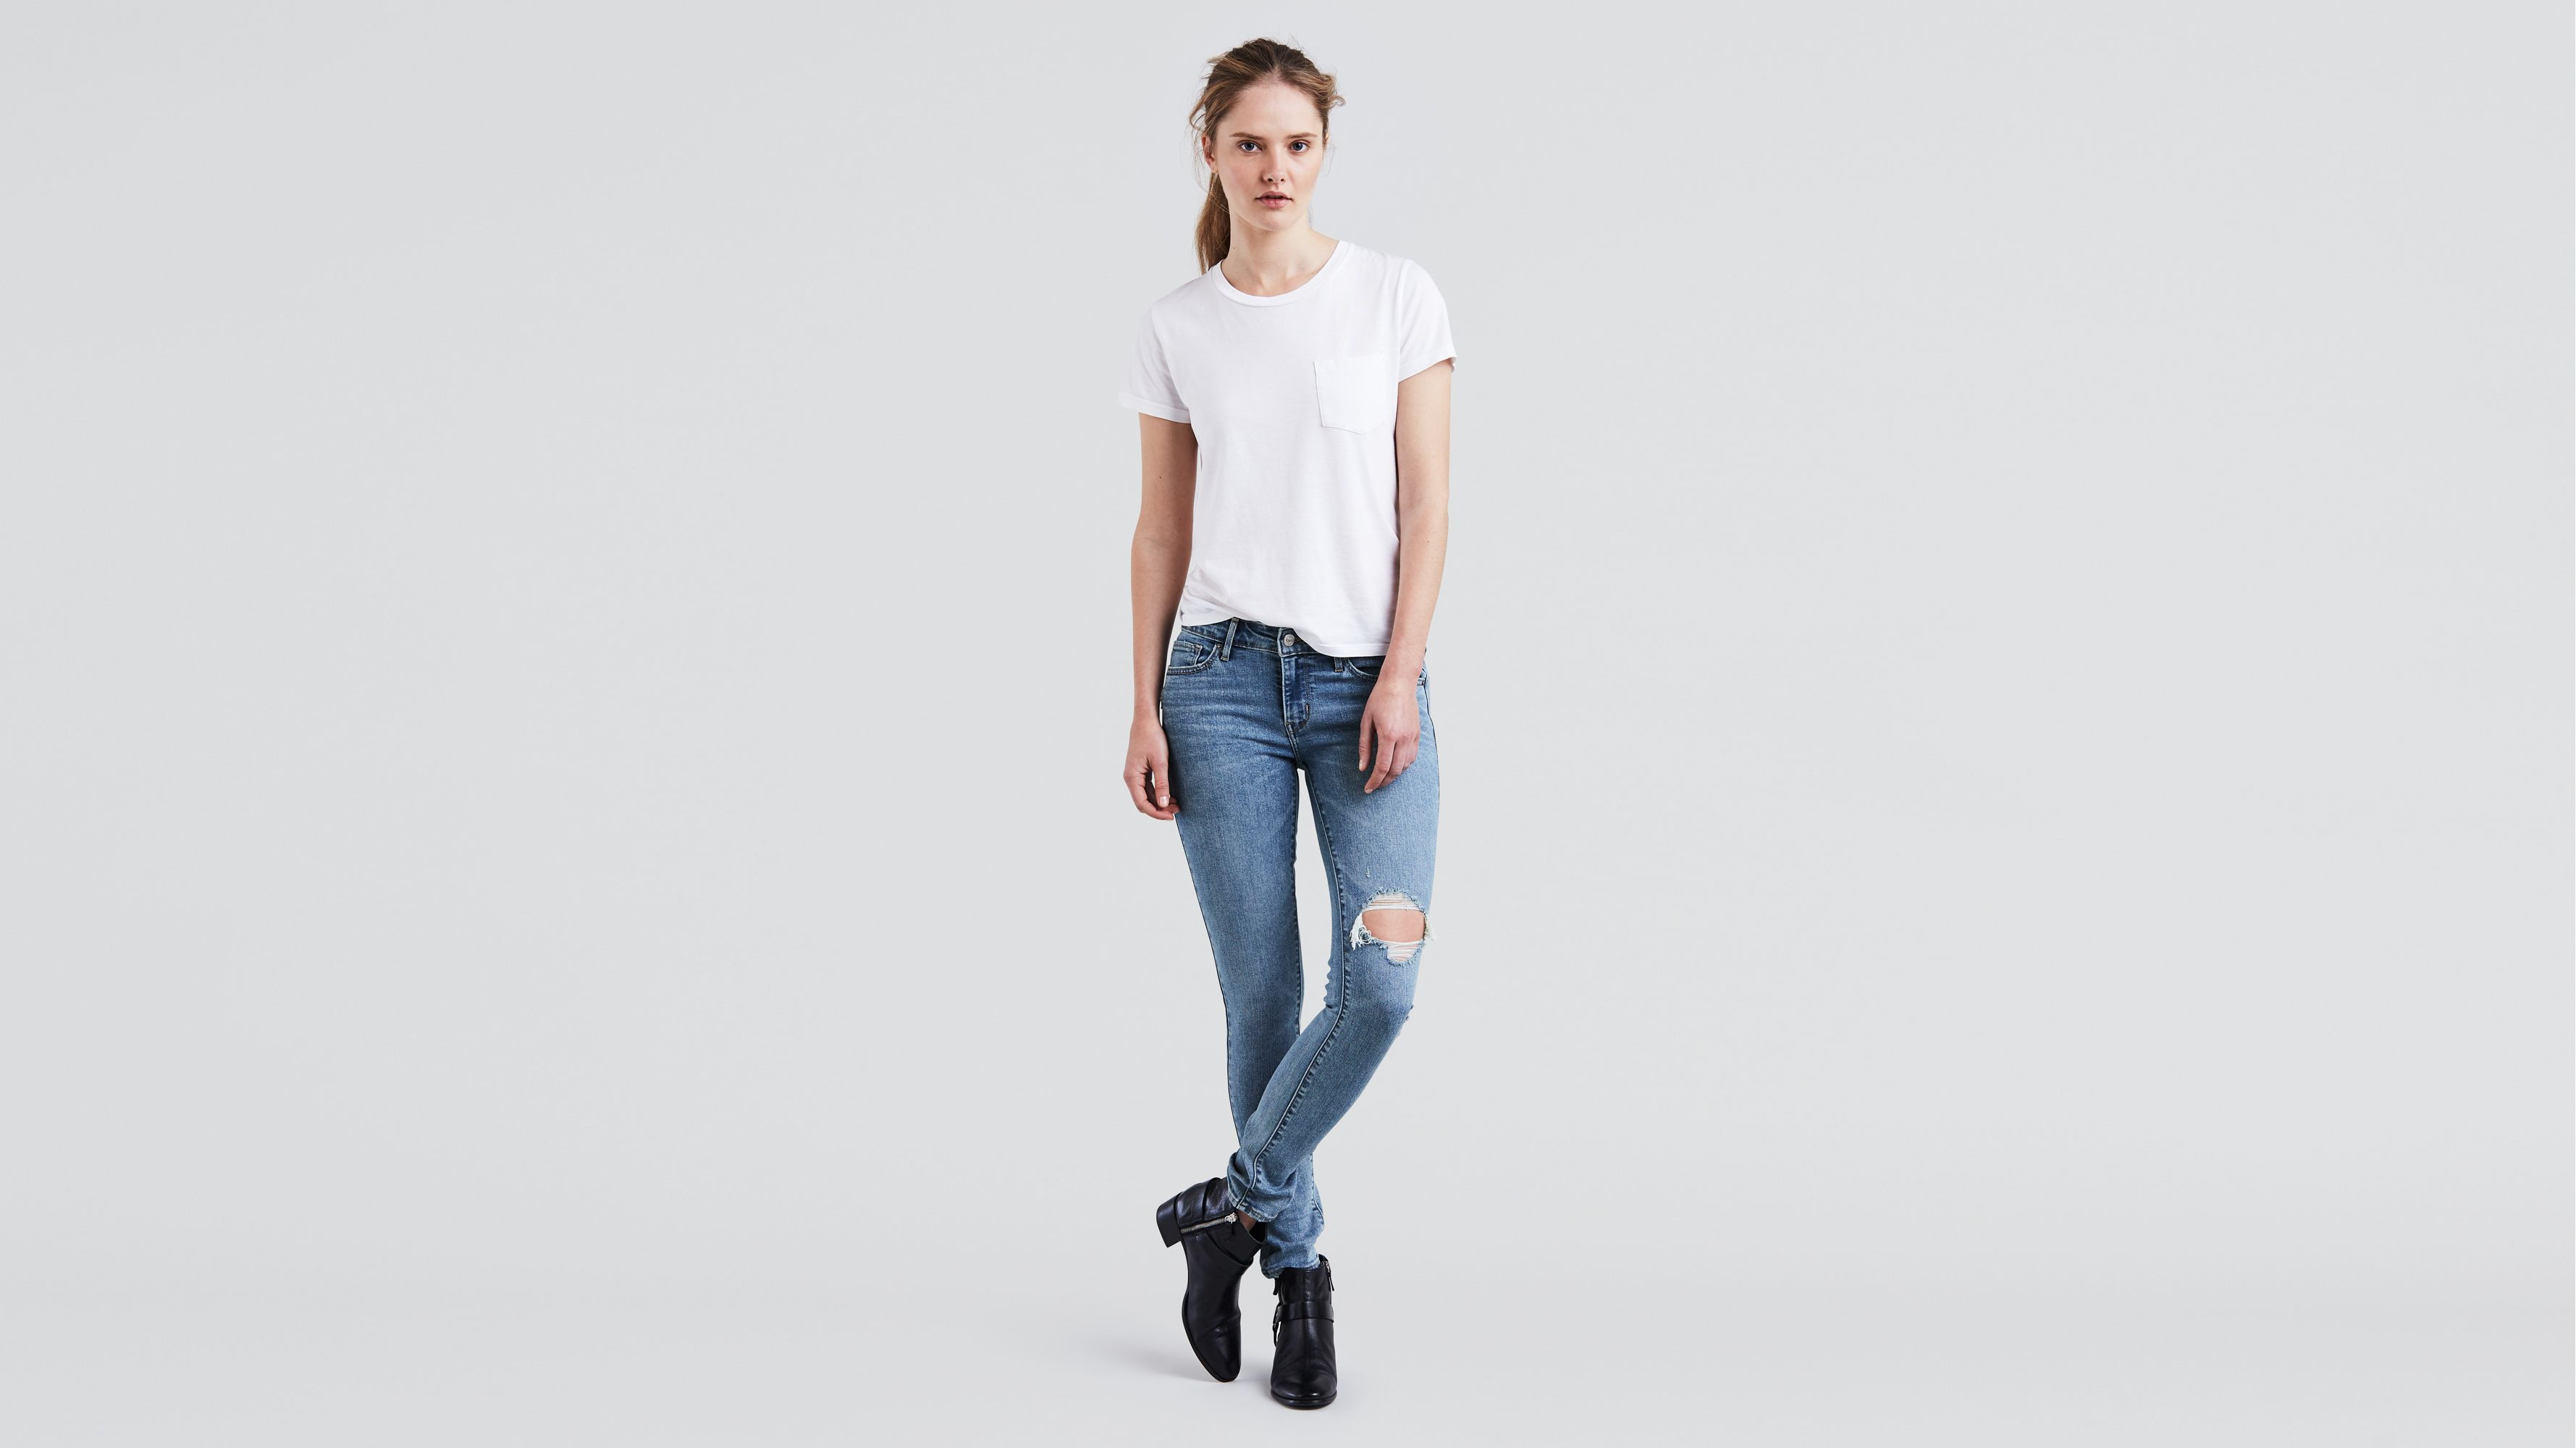 levis 711 skinny jeans womens